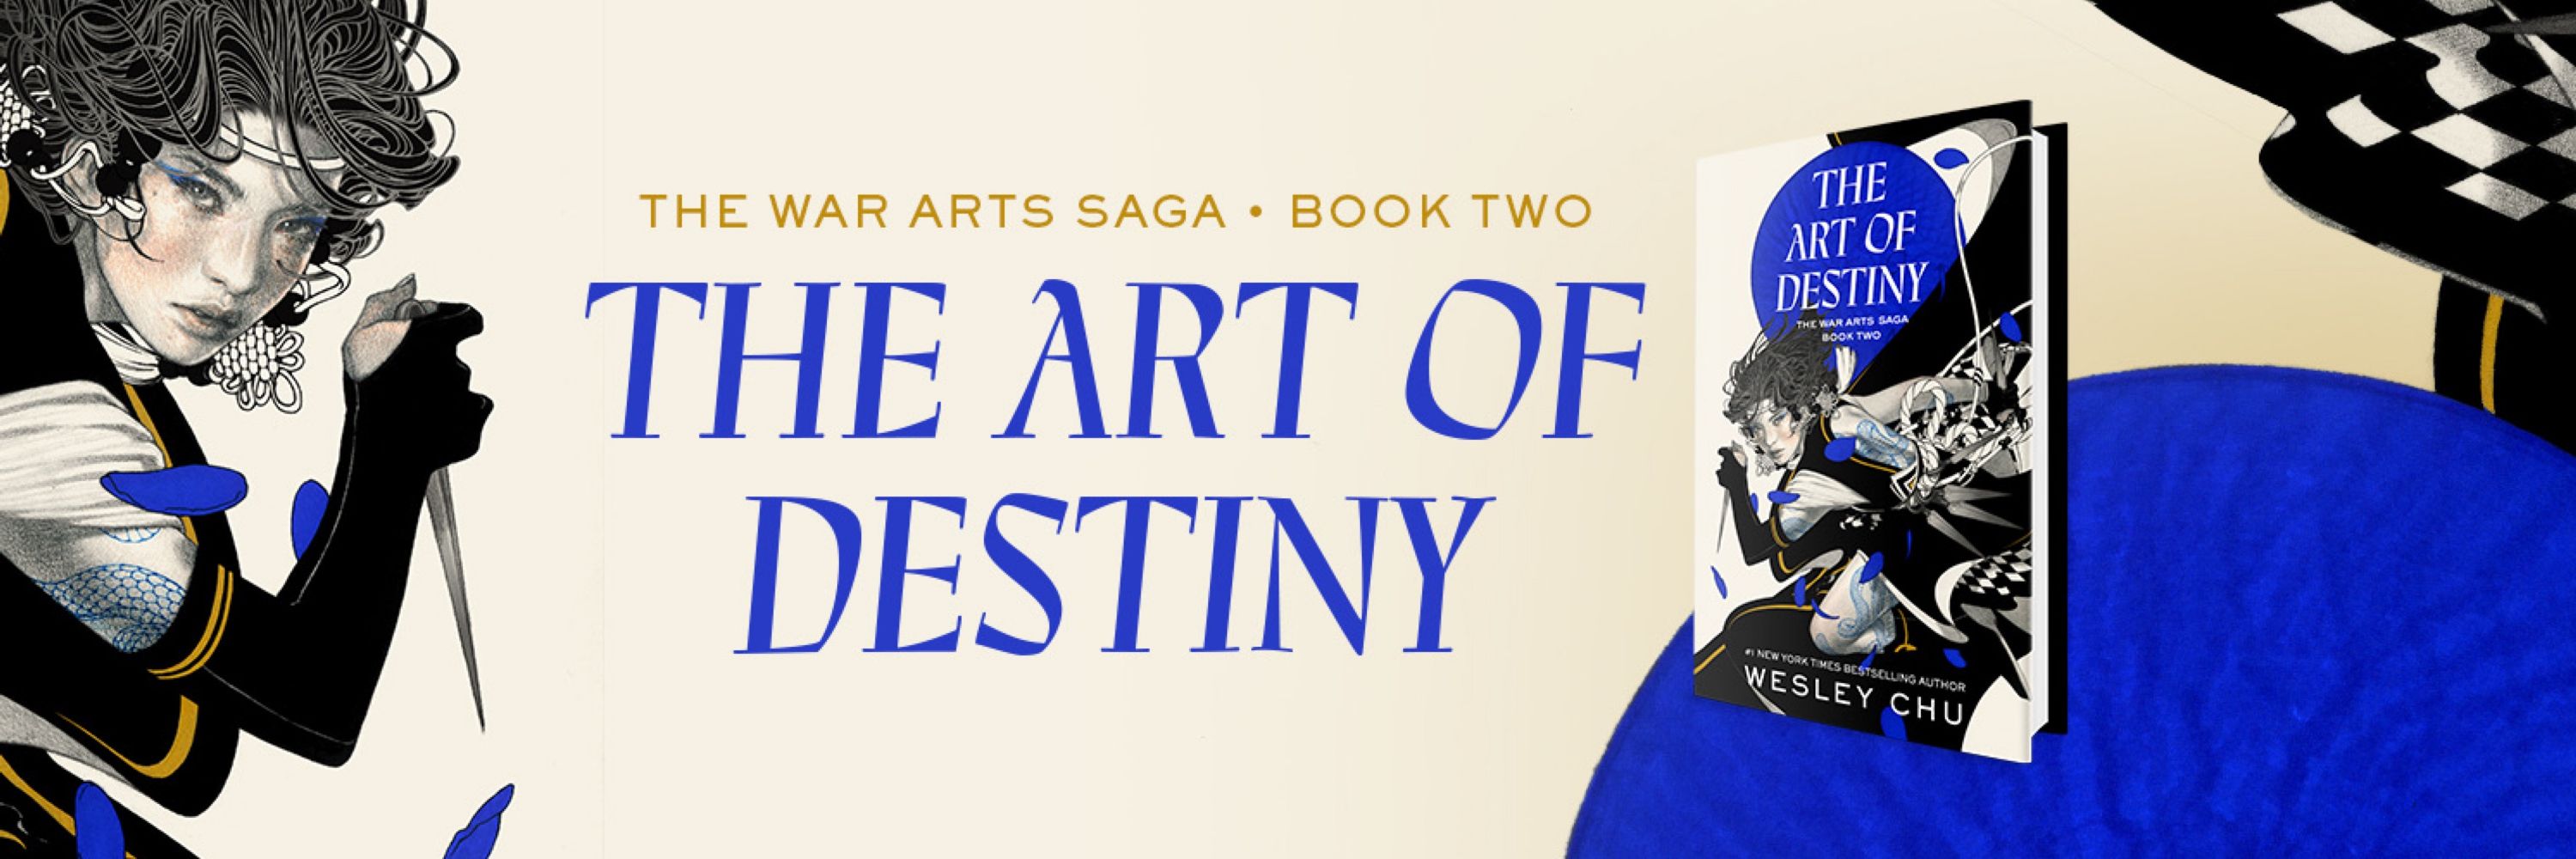 The Art of Destiny by Wesley Chu: 9780593237663